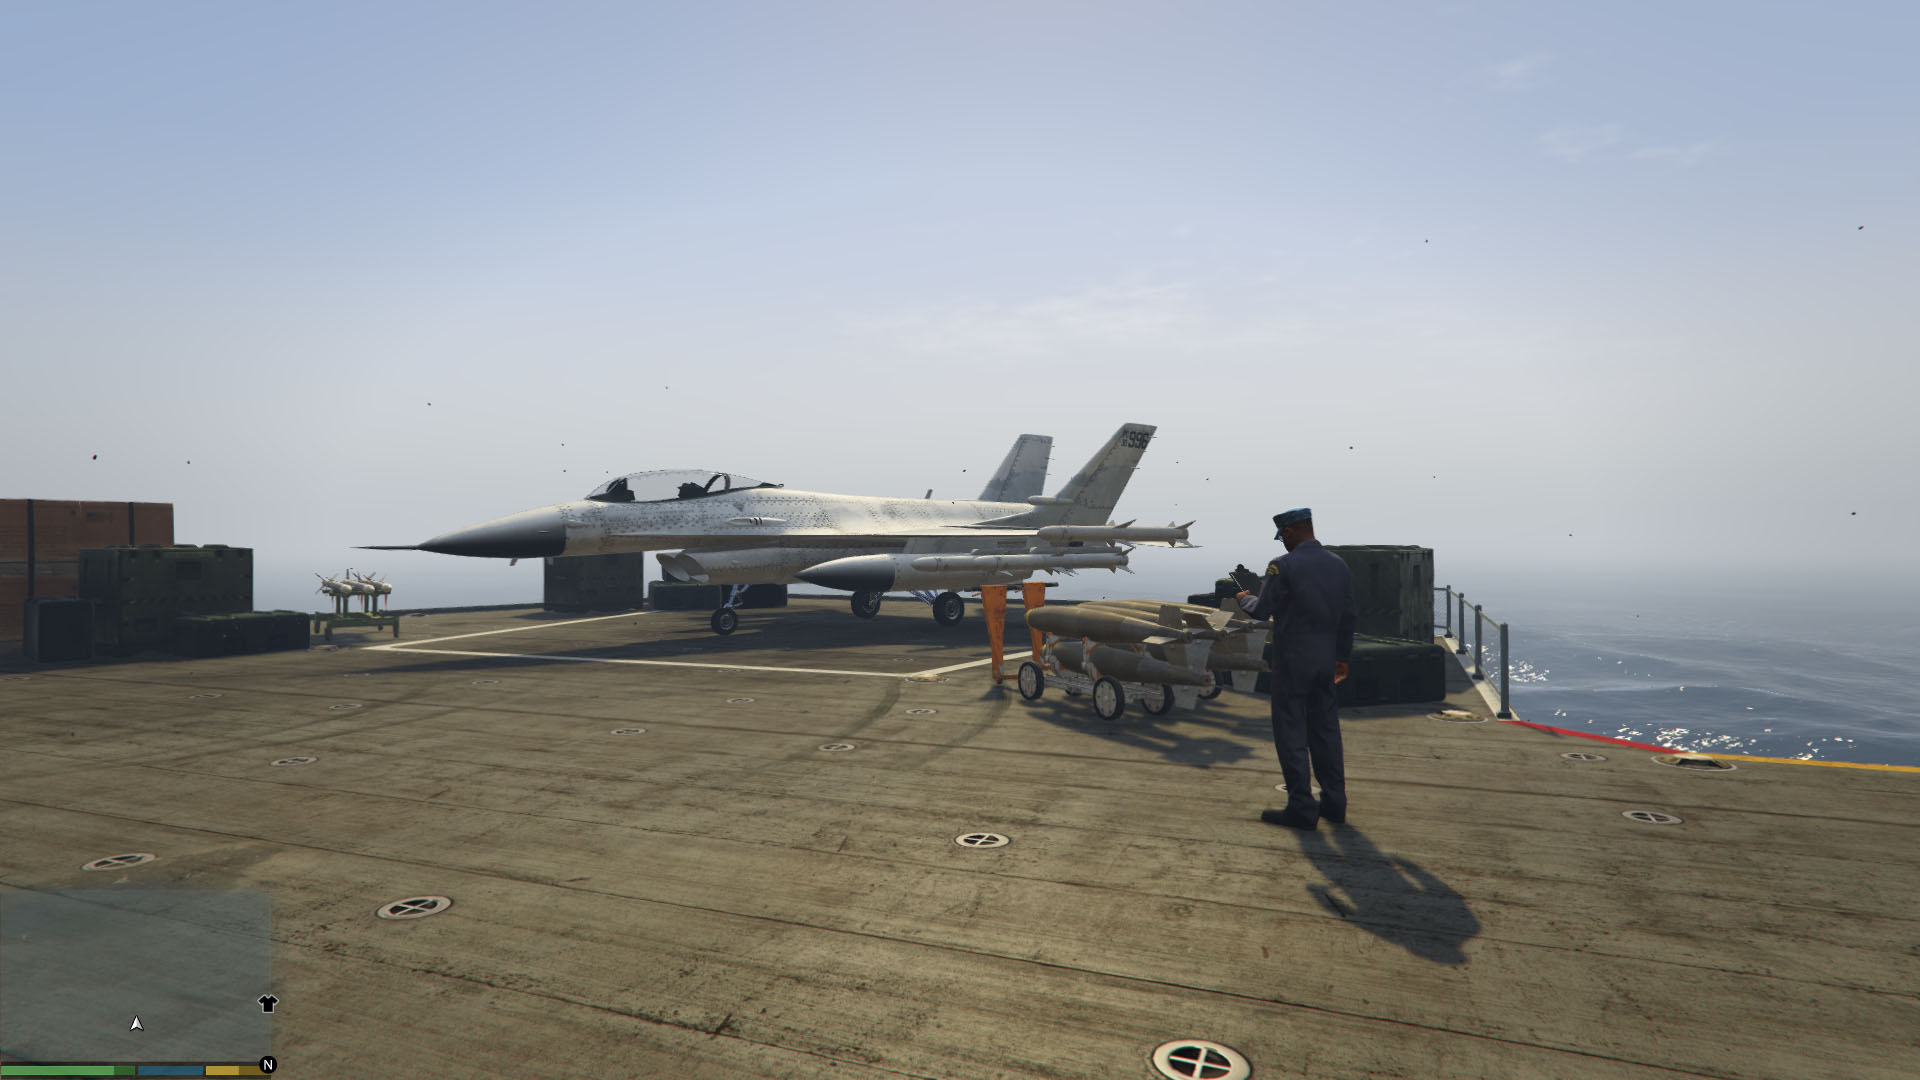 gta v aircraft carrier scenarios 4 image - Mod DB